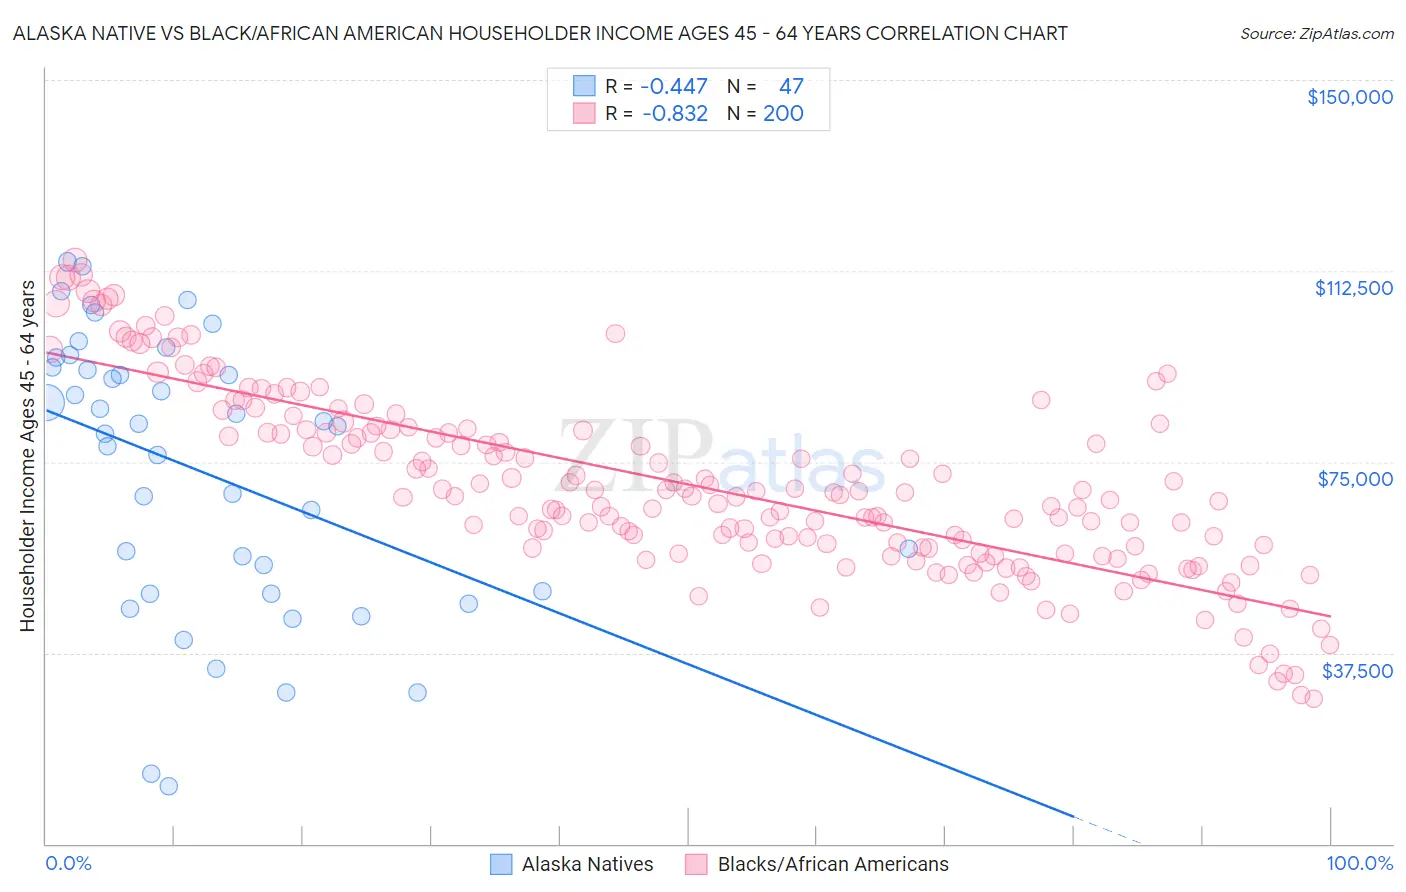 Alaska Native vs Black/African American Householder Income Ages 45 - 64 years